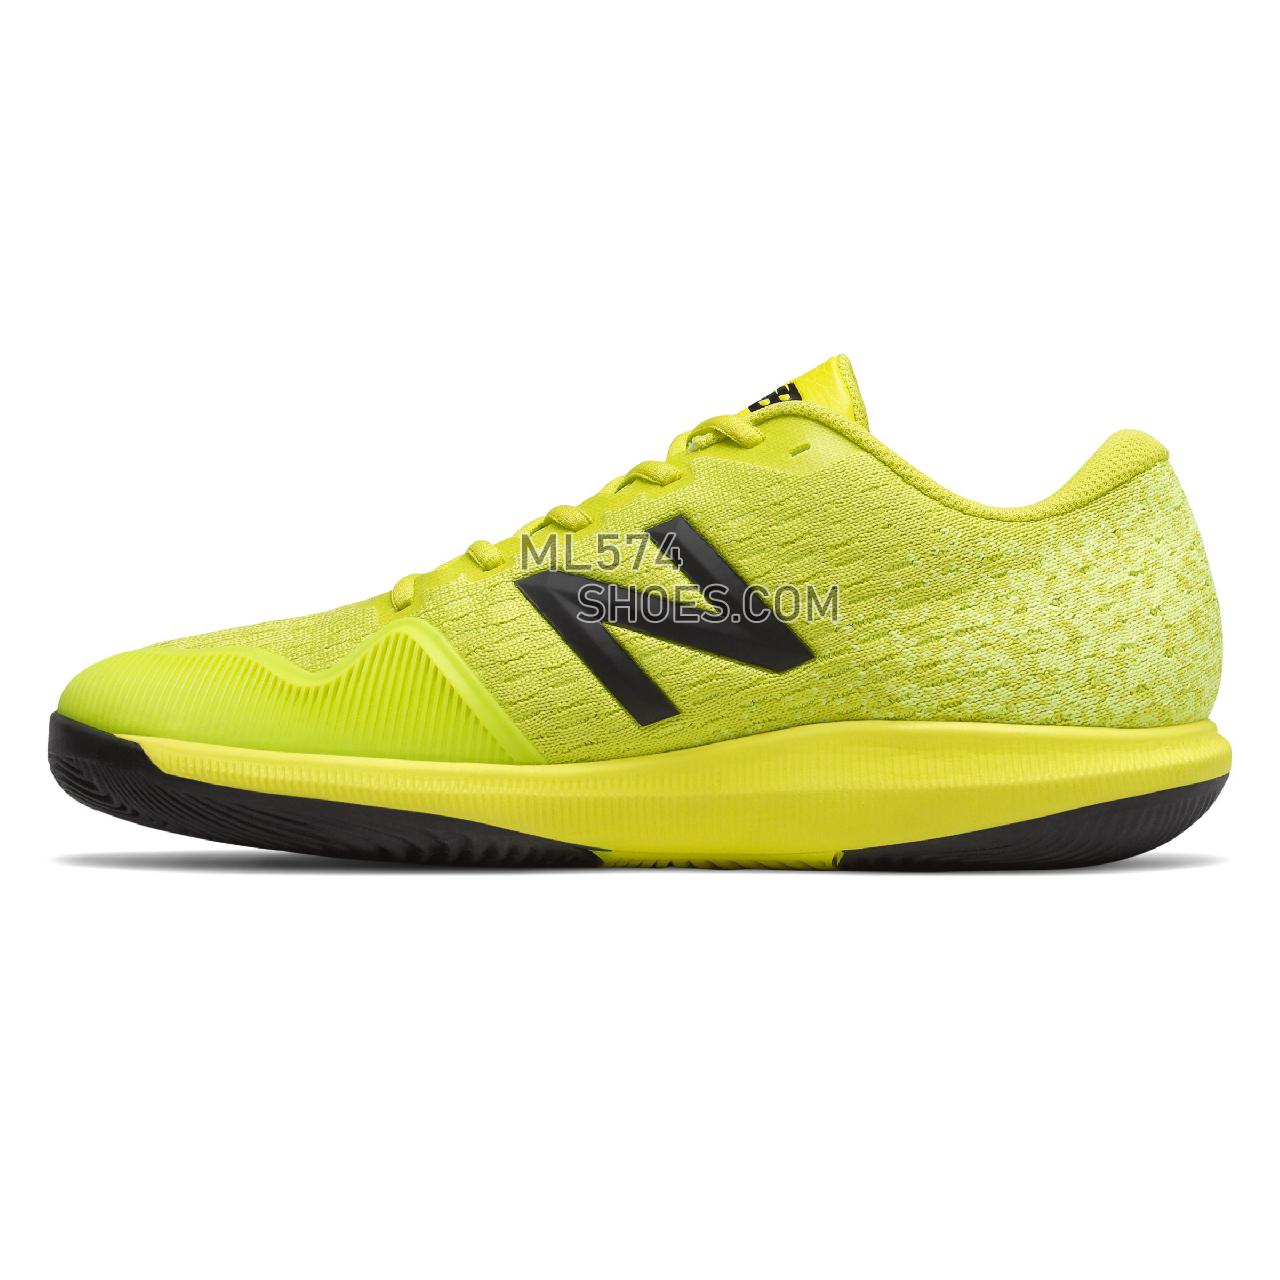 New Balance FuelCell 996v4 - Men's Tennis - Sulphur Yellow with Lemon Slush and Black - MCH996S4